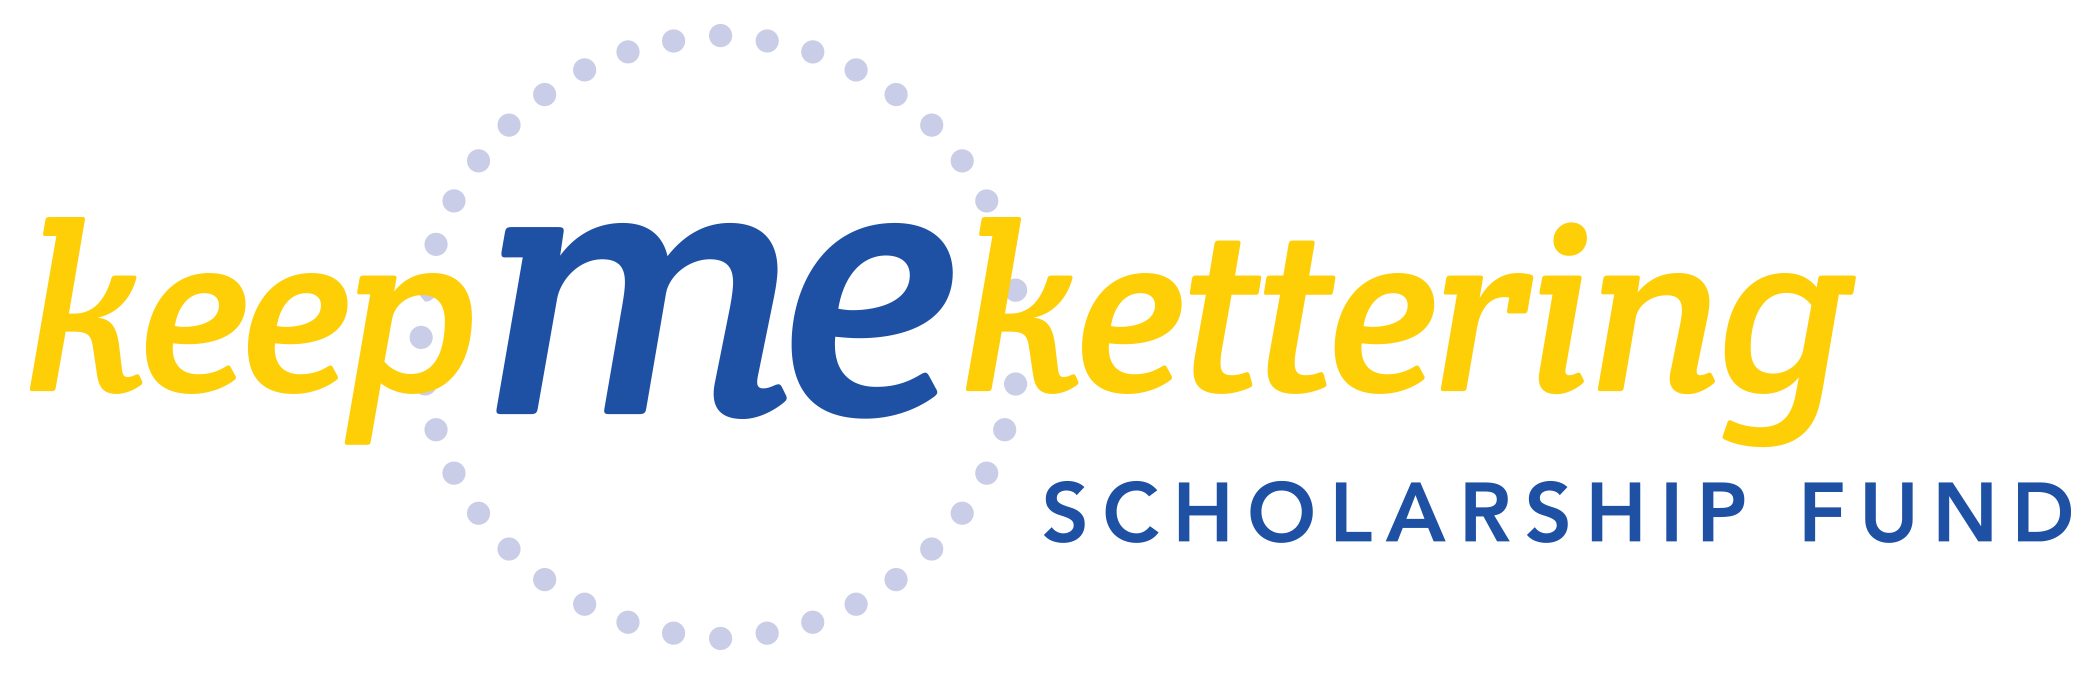 Keep Me Kettering Scholarship Logo